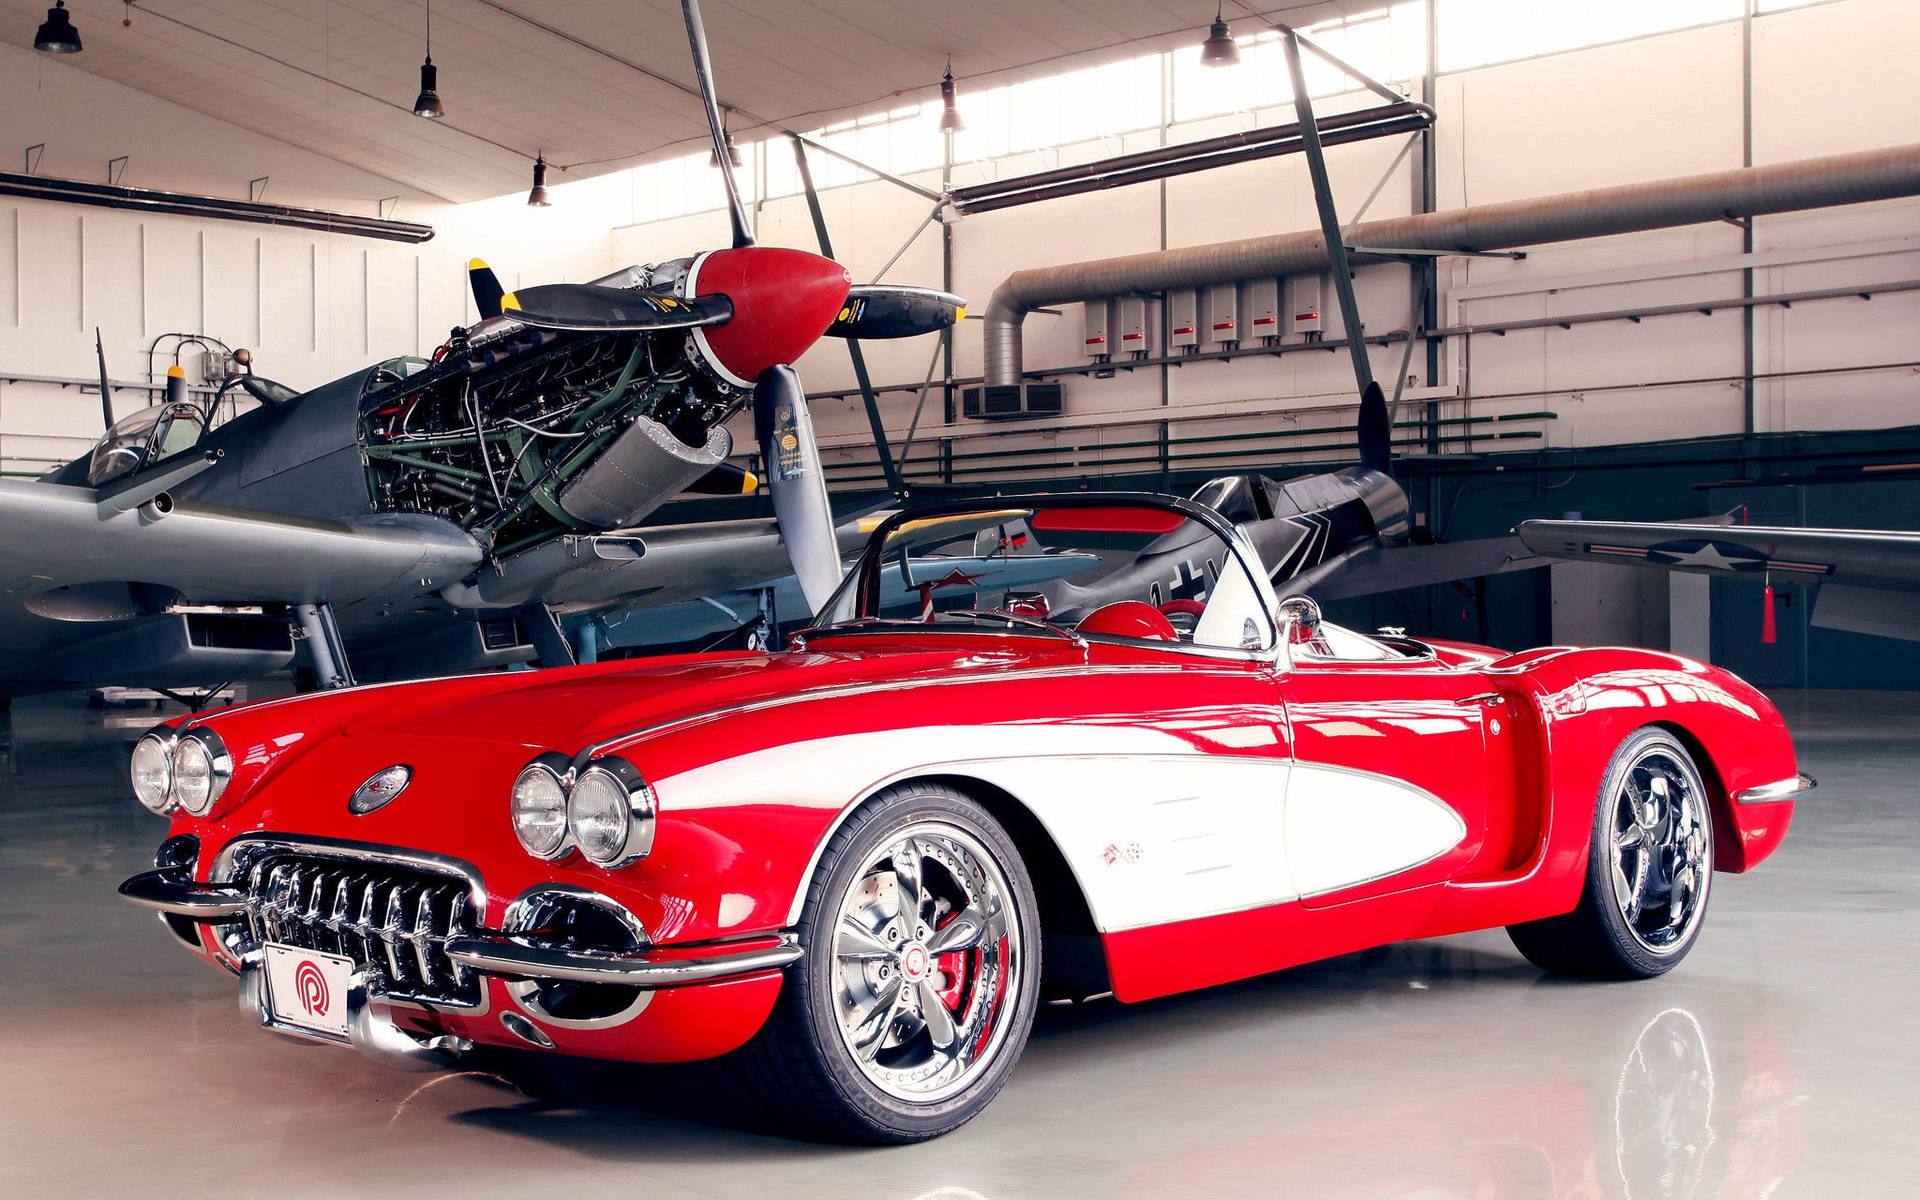 Majestic 1959 Red Chevrolet Corvette Classic Car Wallpaper